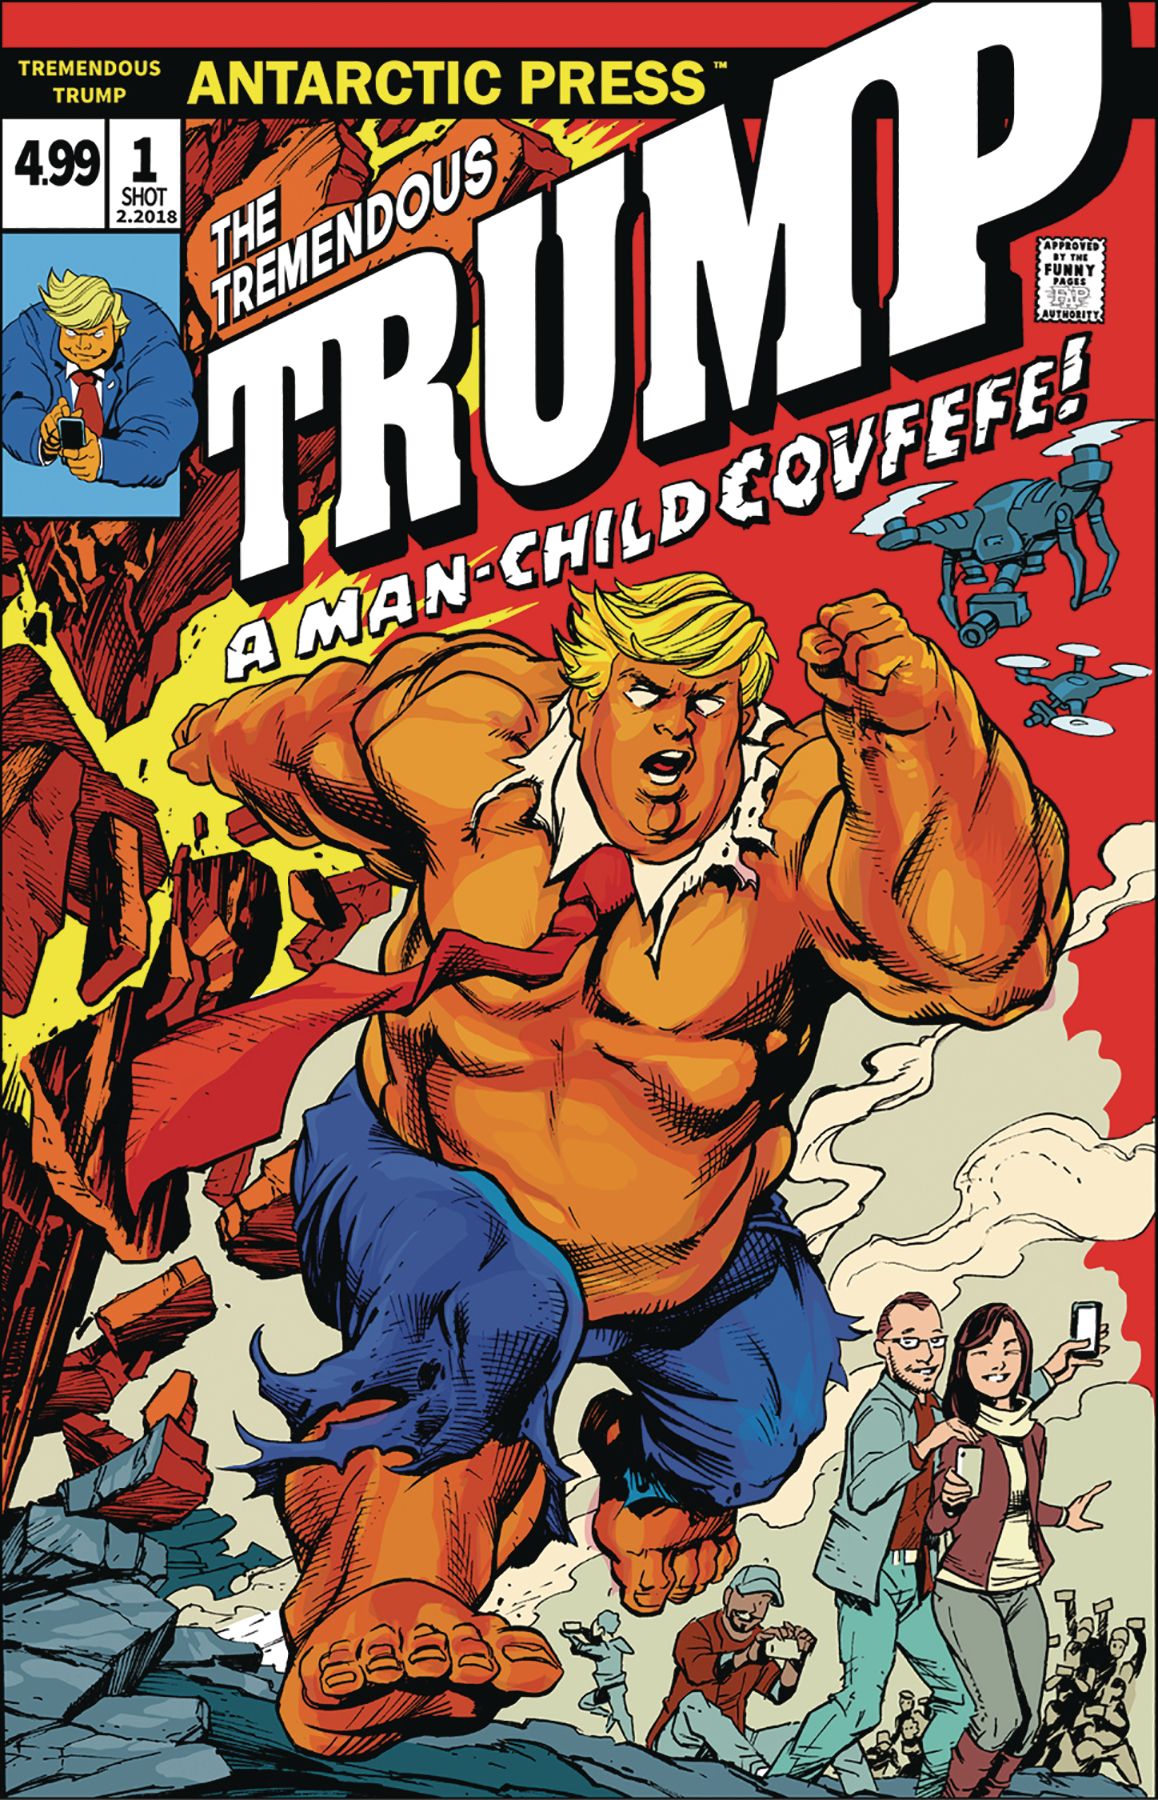 Tremendous Trump: A Man-Child Covfefe Comic